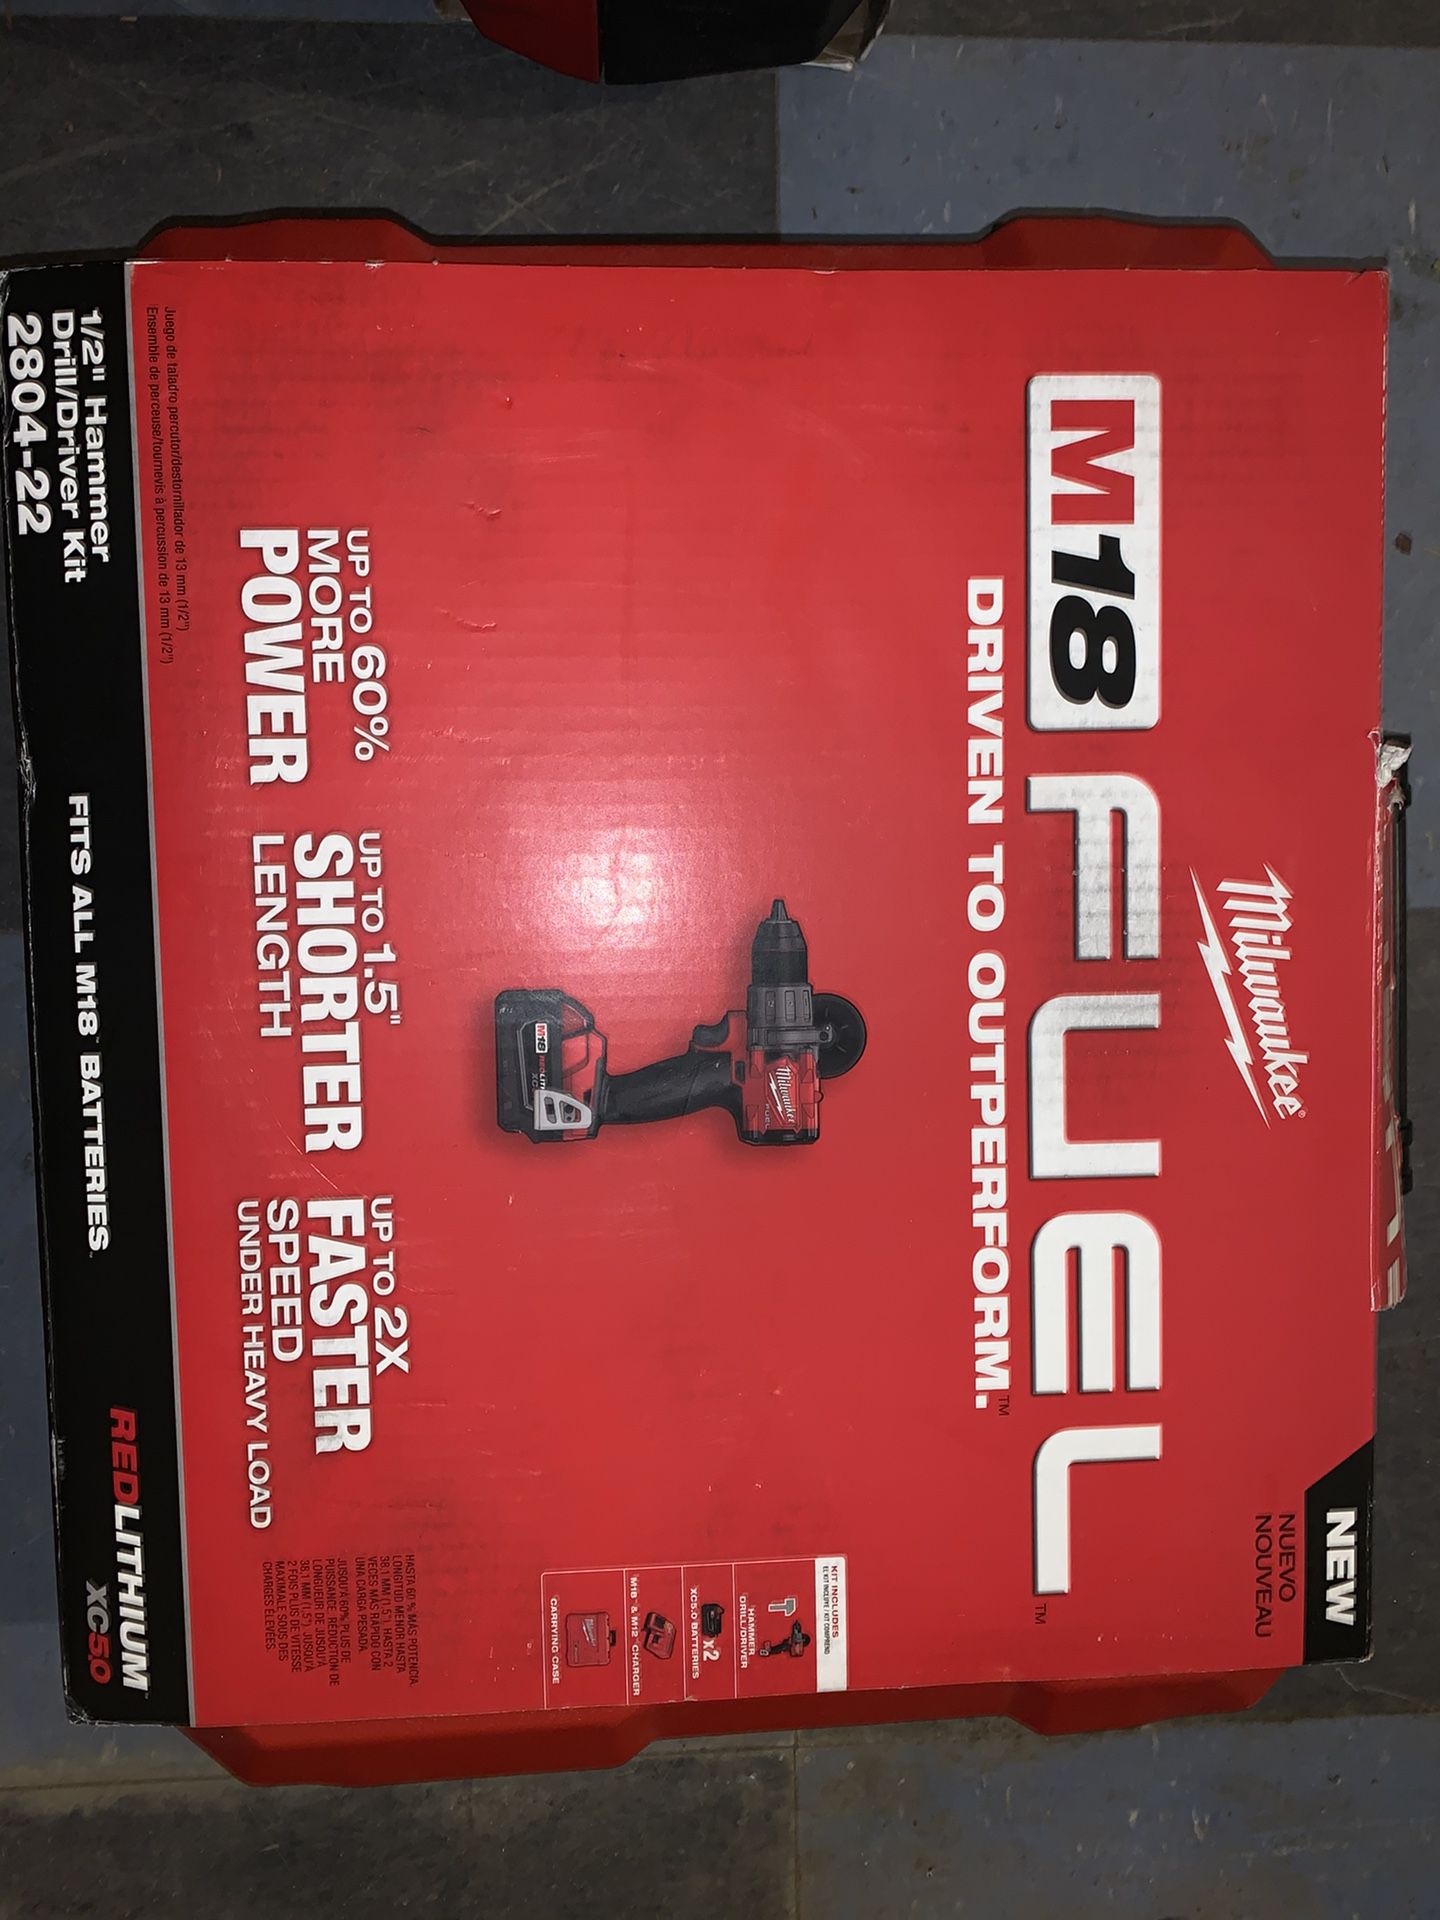 Milwaukee M18 Fuel Hammer Drill Kit